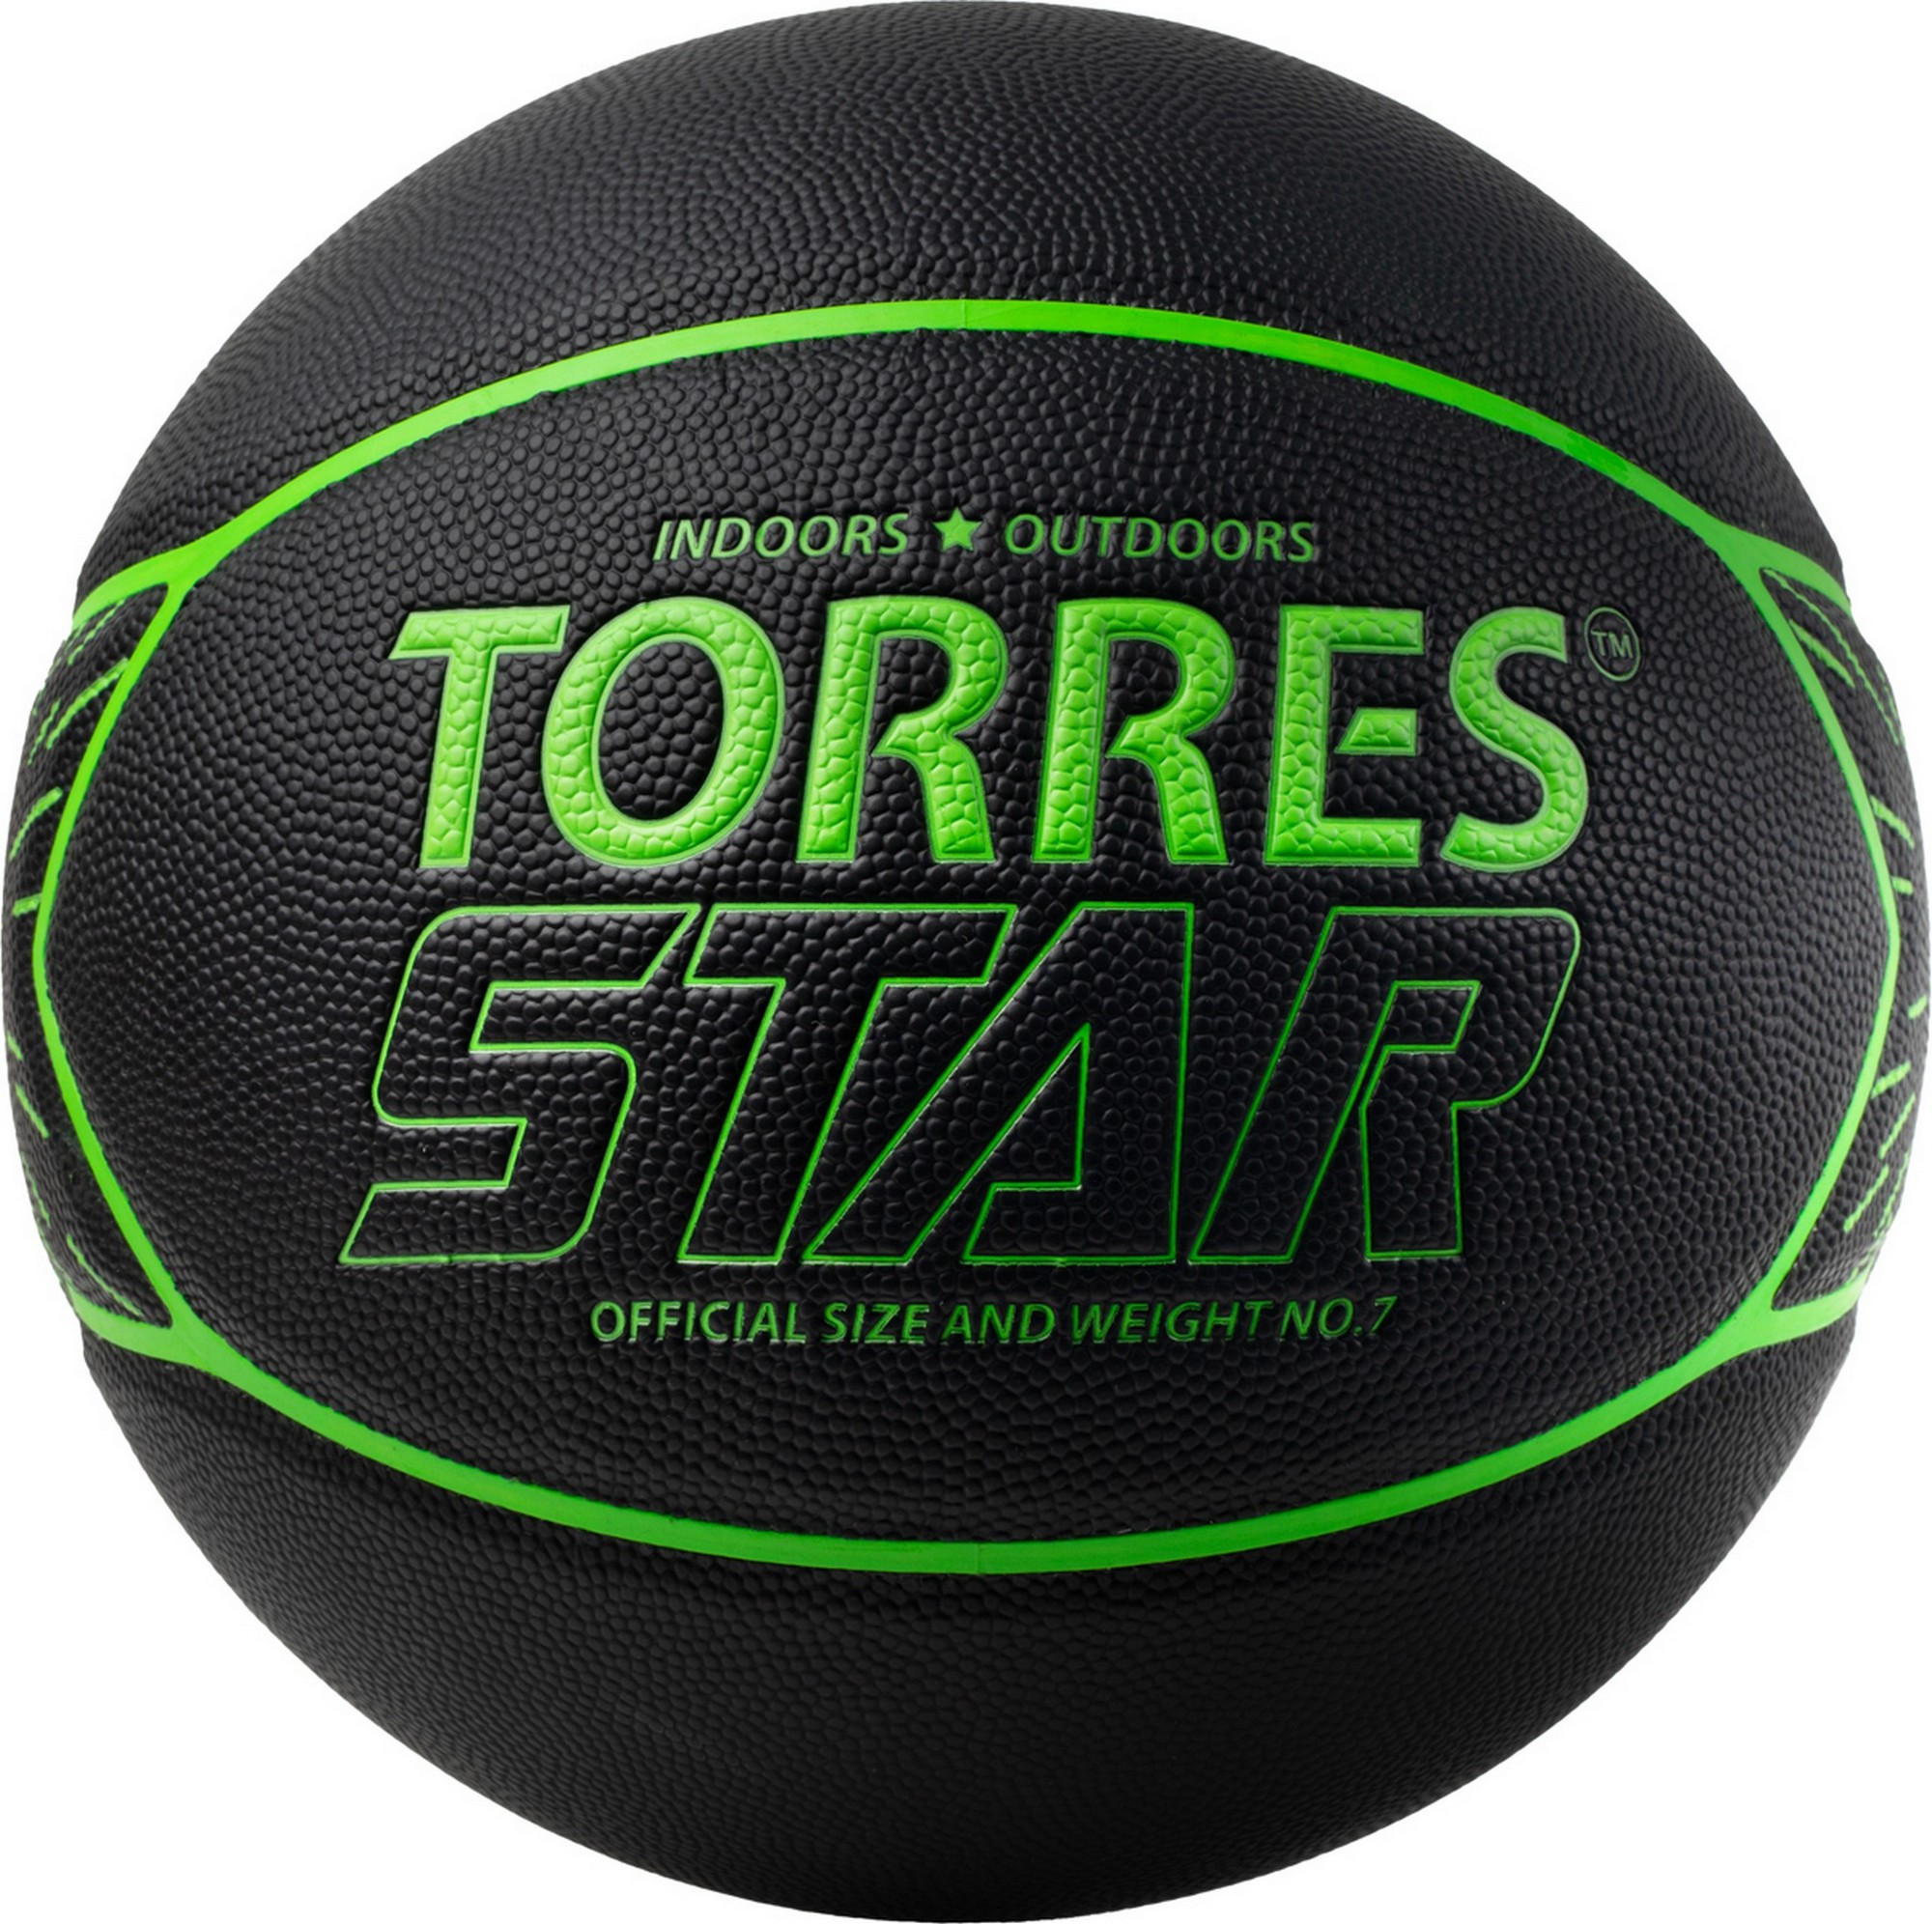   Torres Star B323127 .7